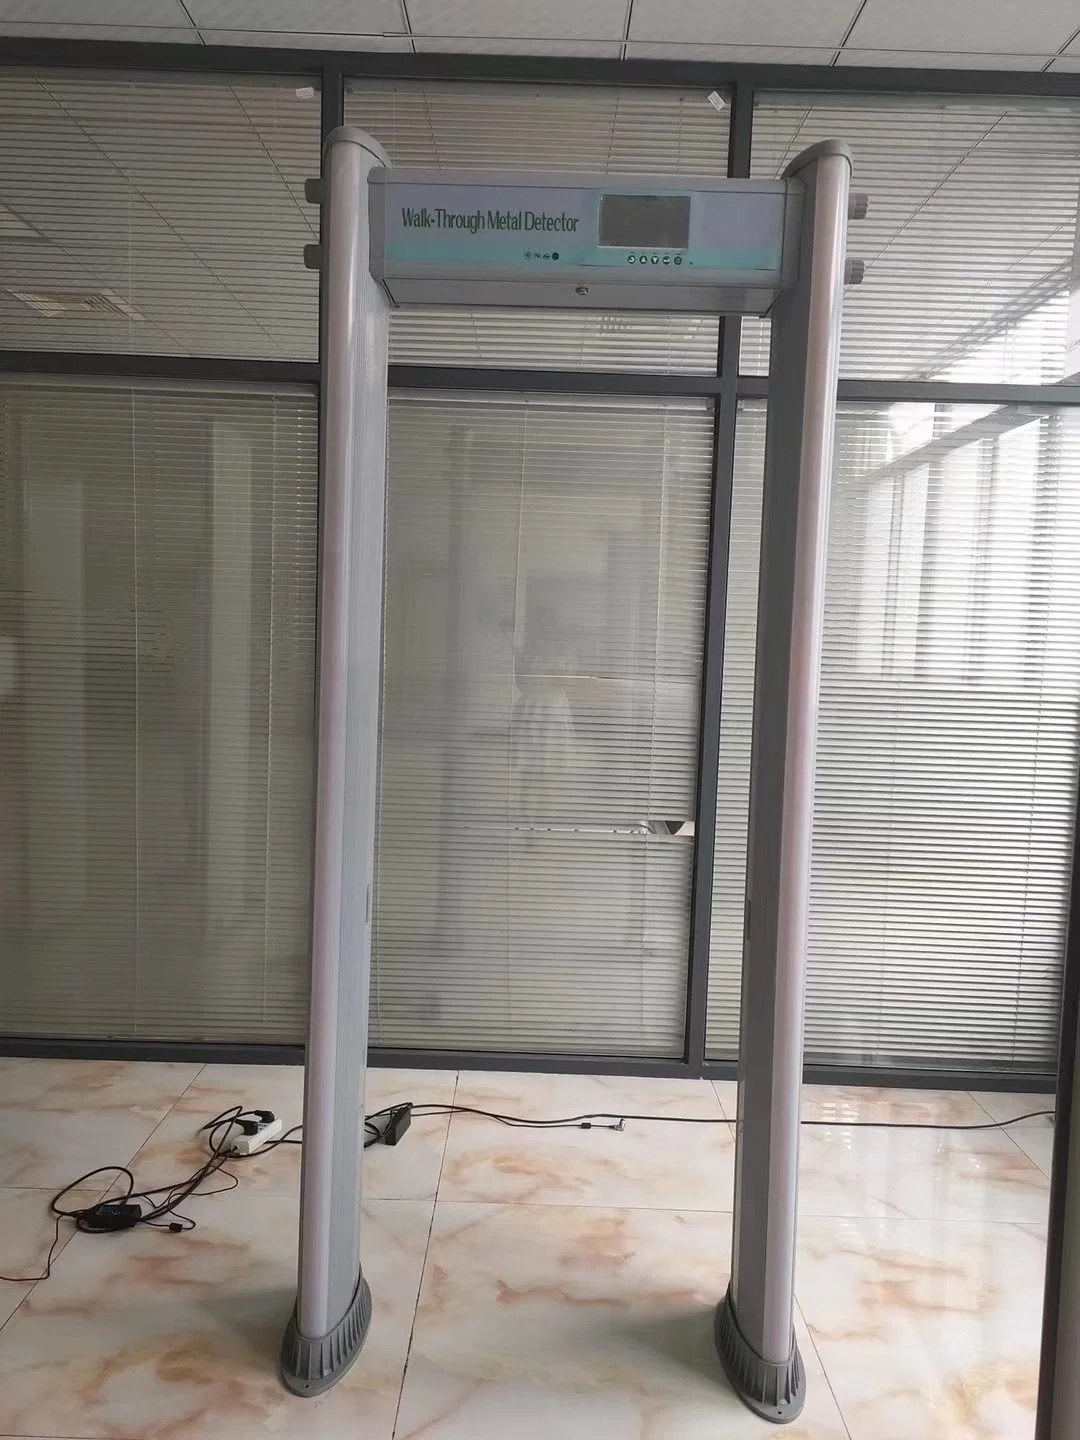 Security Inspection Door Frame Walk Through Metal Detector for Qatar 2022